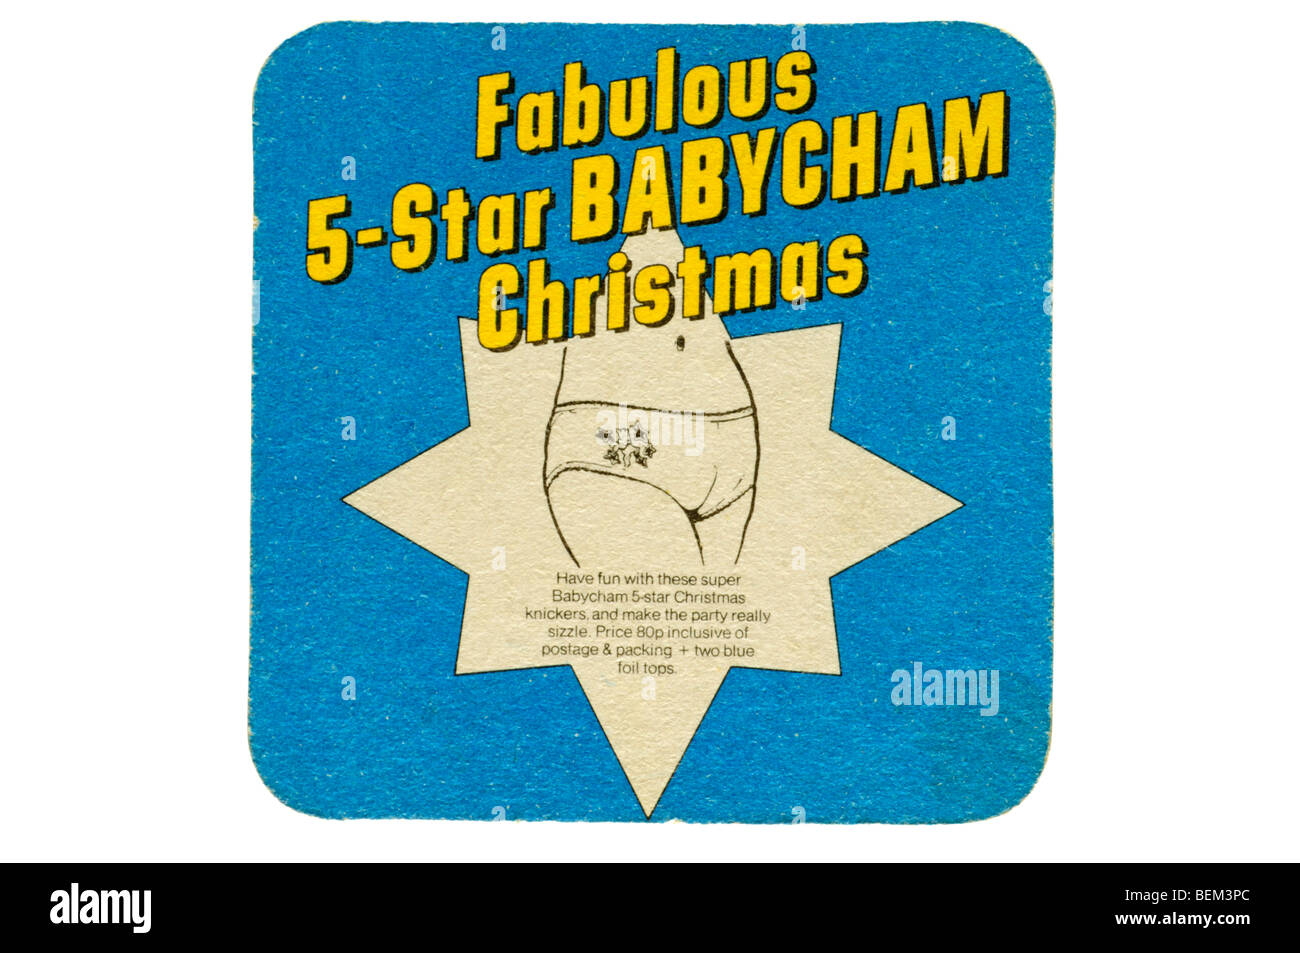 fabulous 5 star babycham christmas Stock Photo